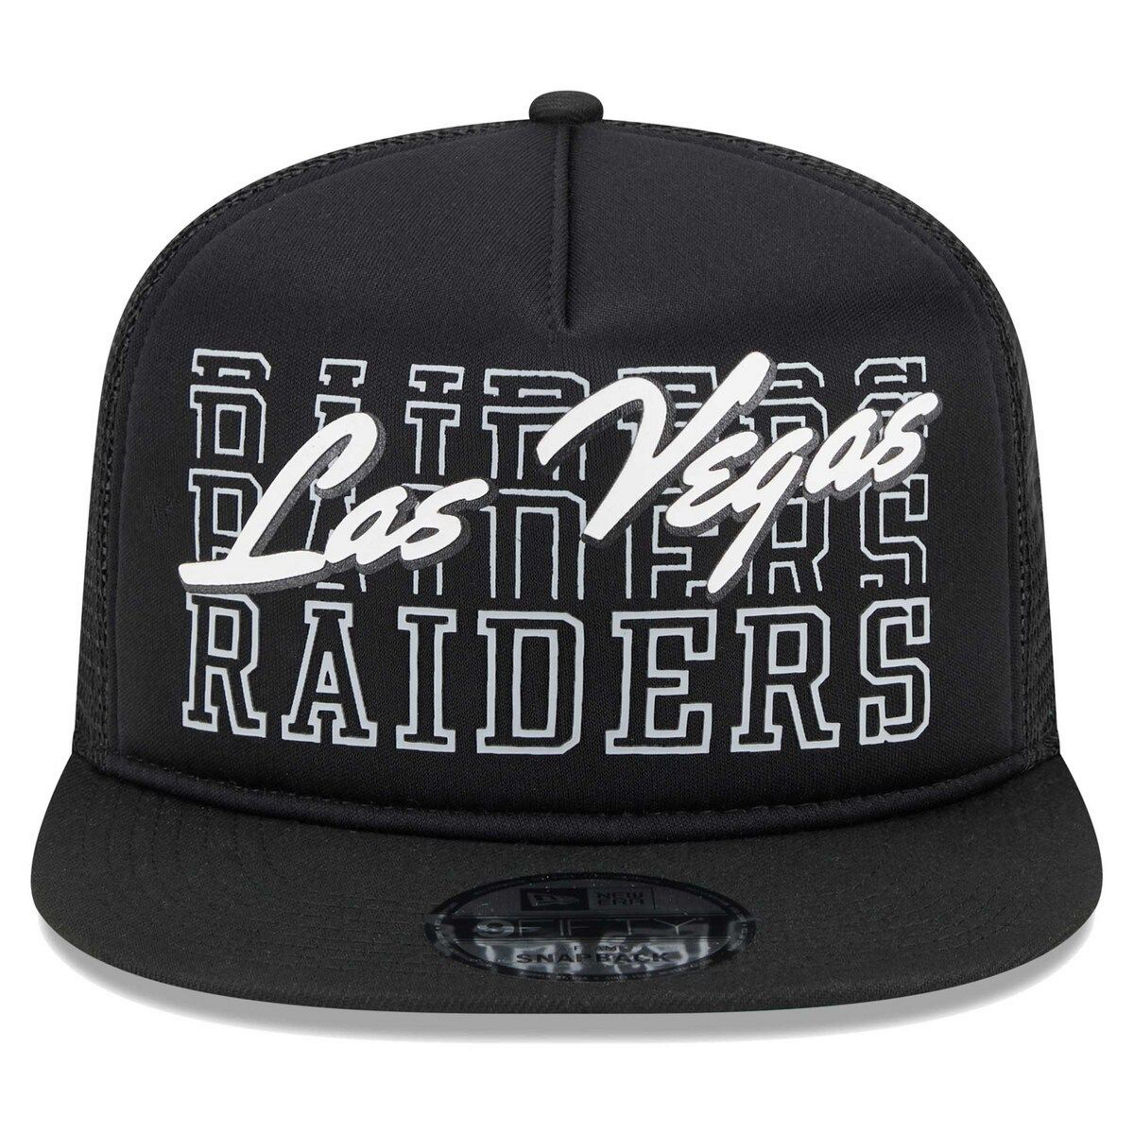 New Era Men's Black Las Vegas Raiders Instant Replay 9FIFTY Snapback Hat - Image 3 of 4